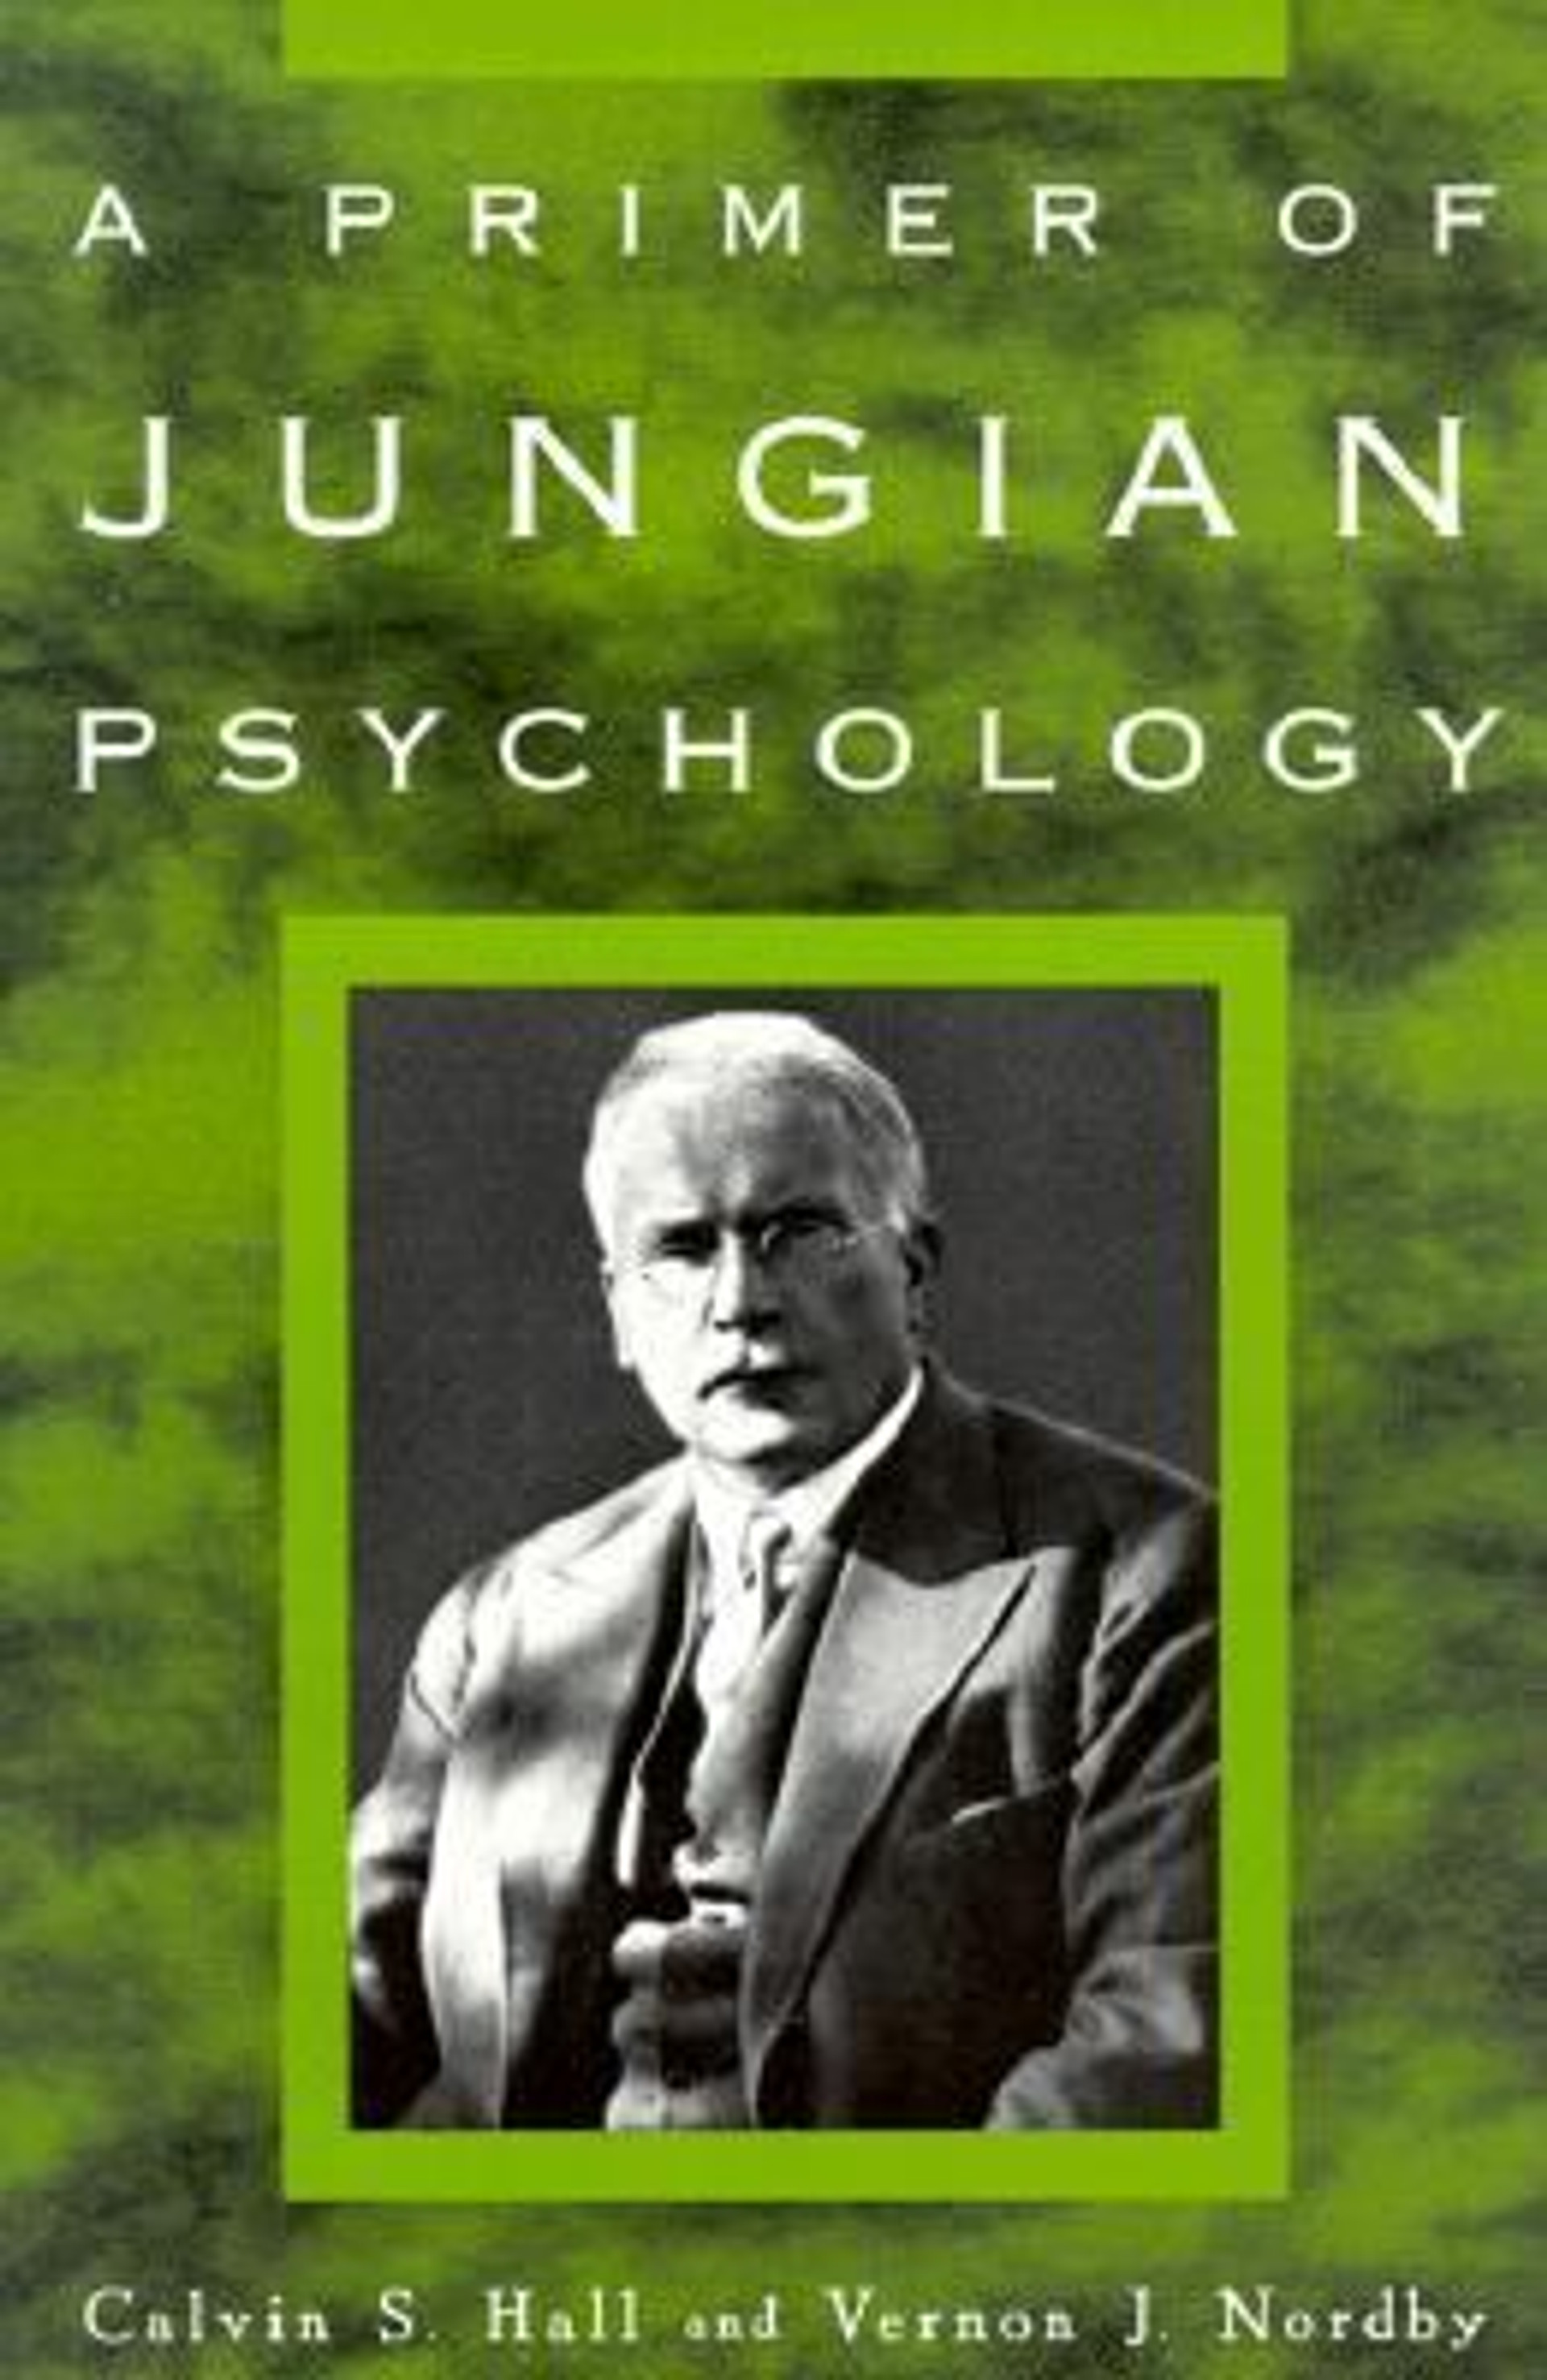 phd jungian psychology